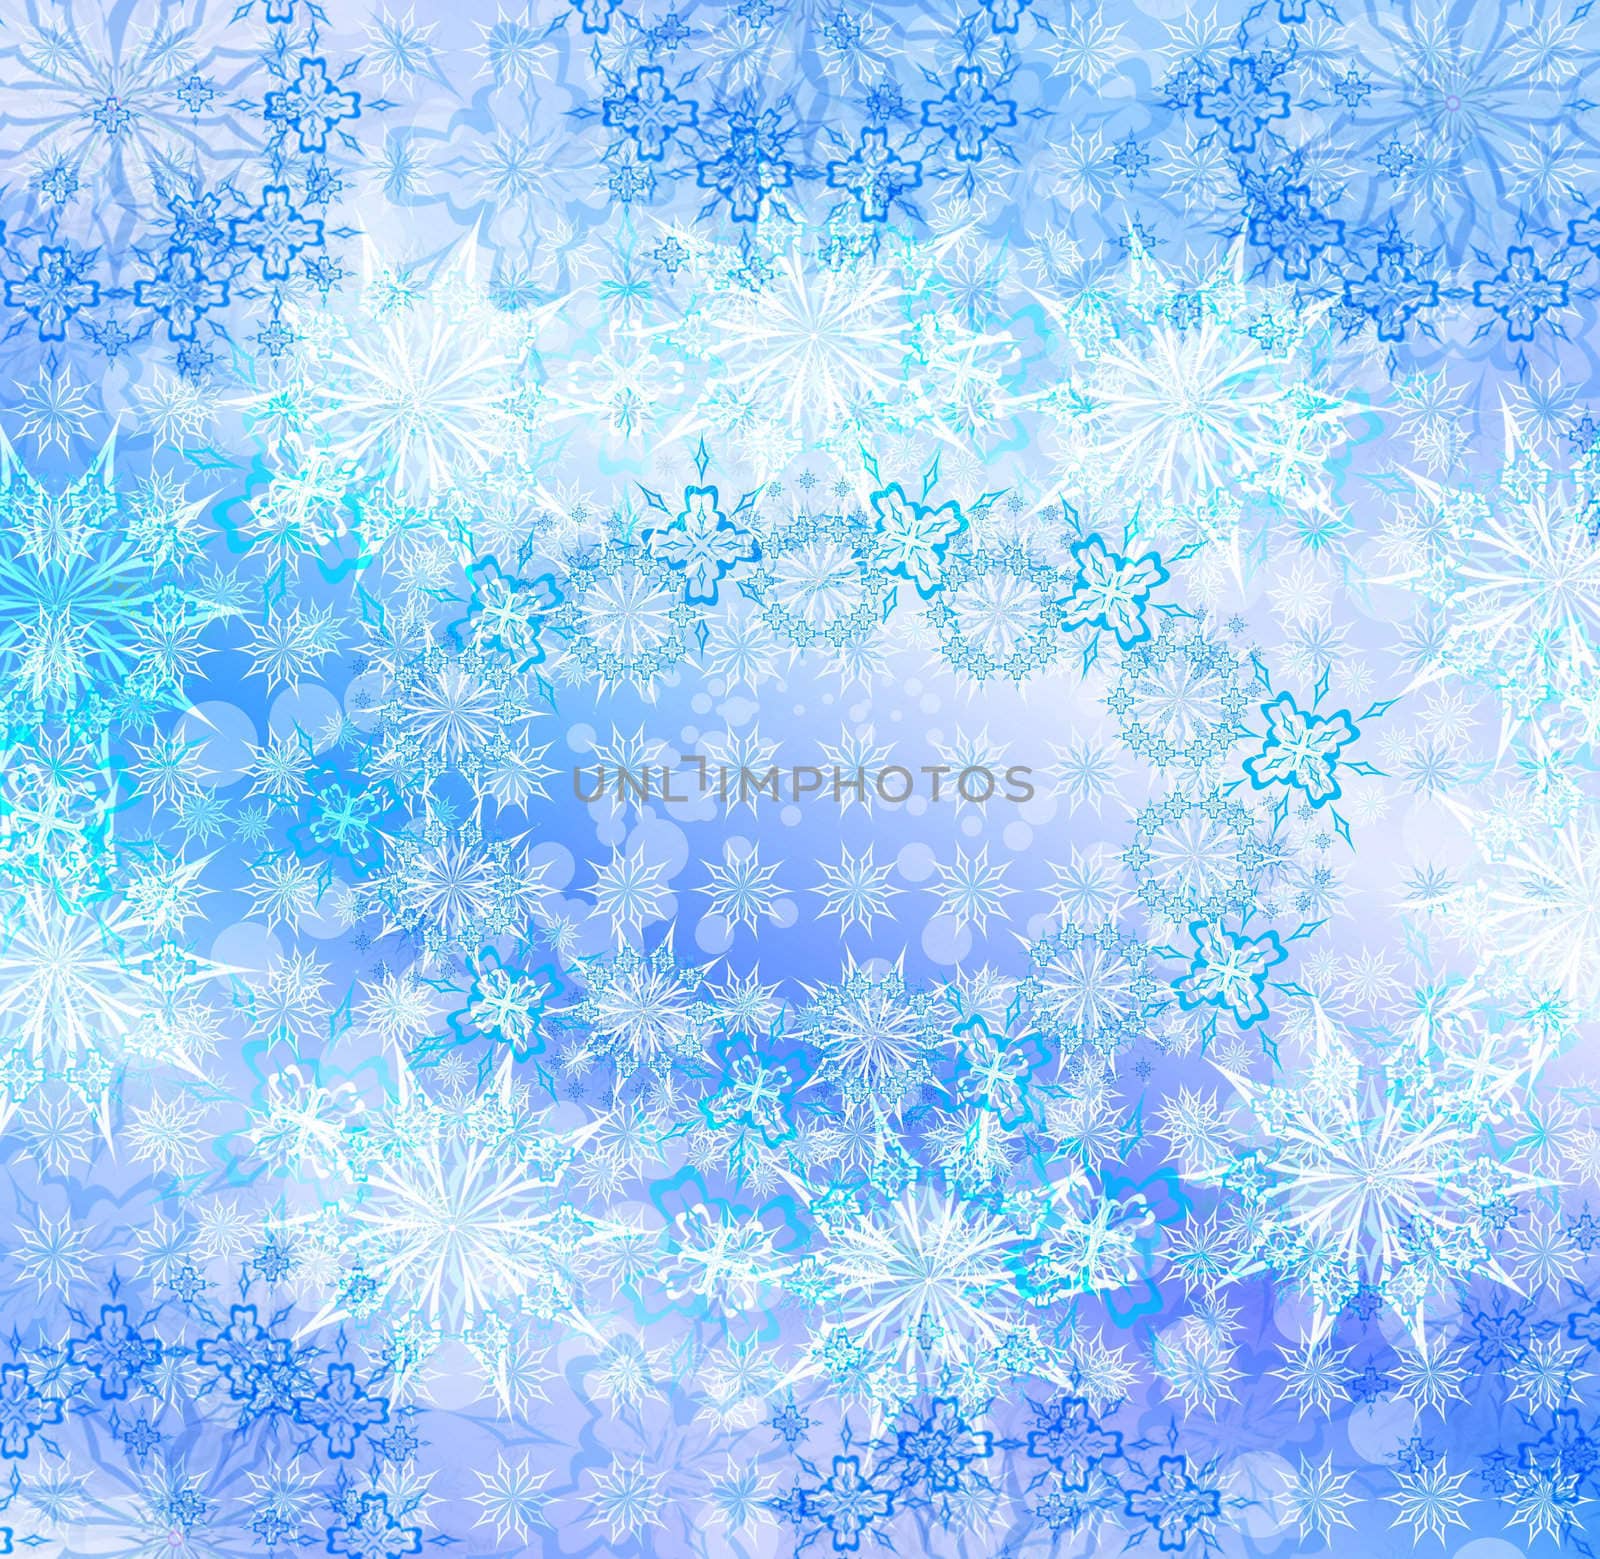 Abstract celebratory winter illustration